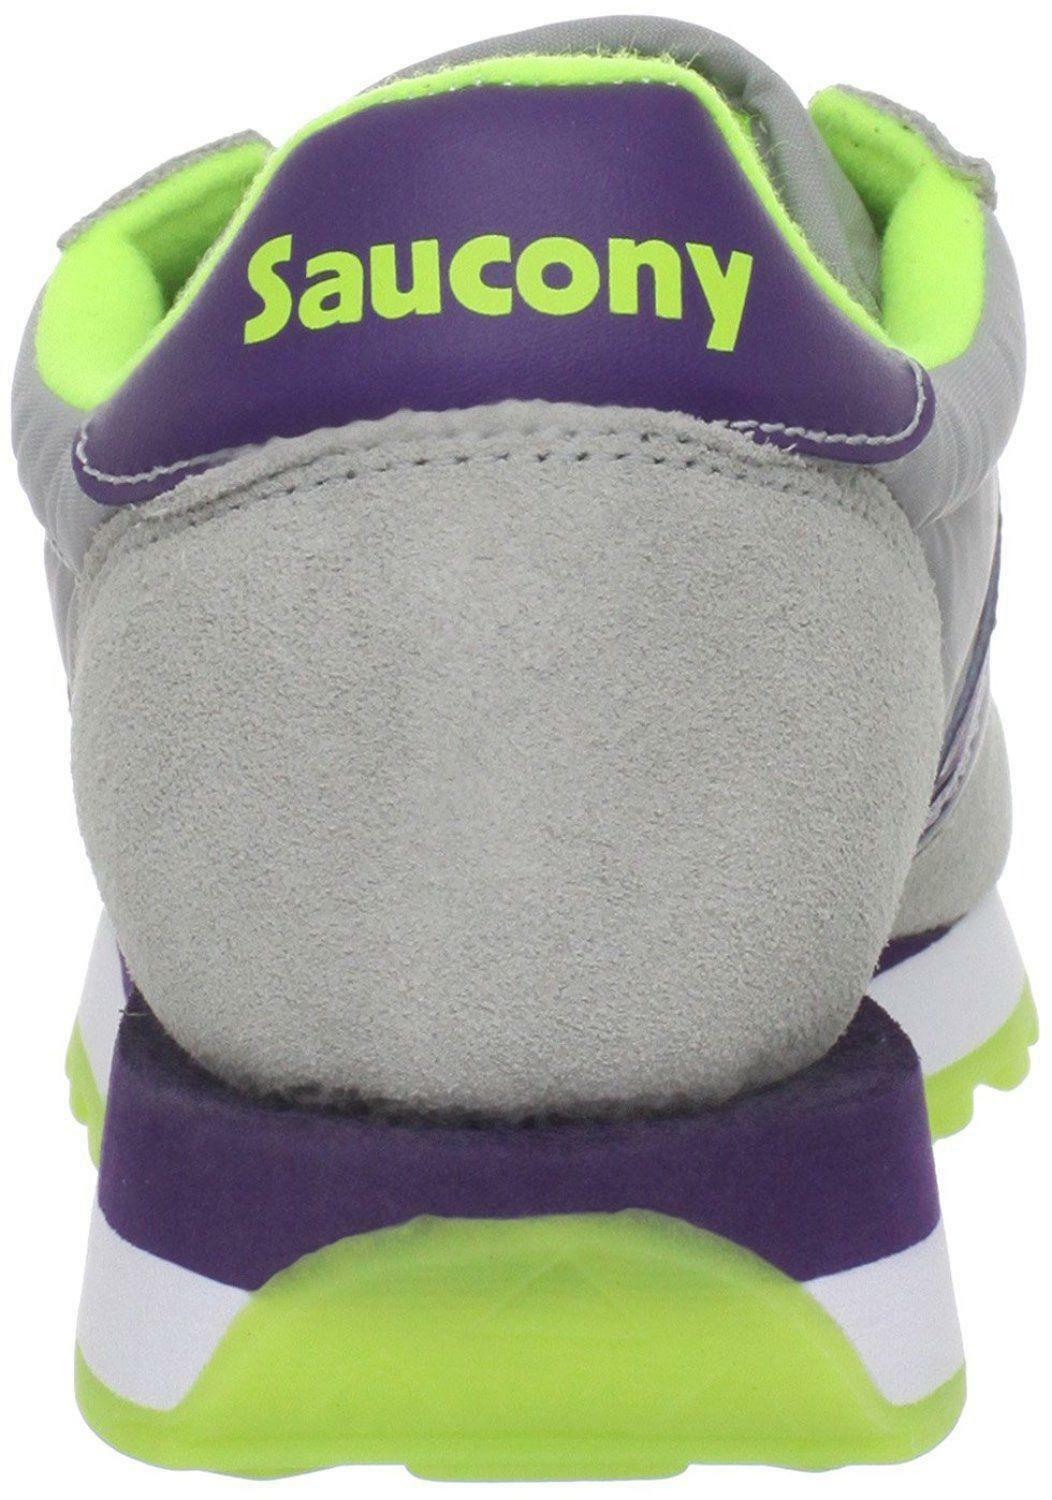 saucony saucony jazz original scarpe sportive donna grigie 1044261